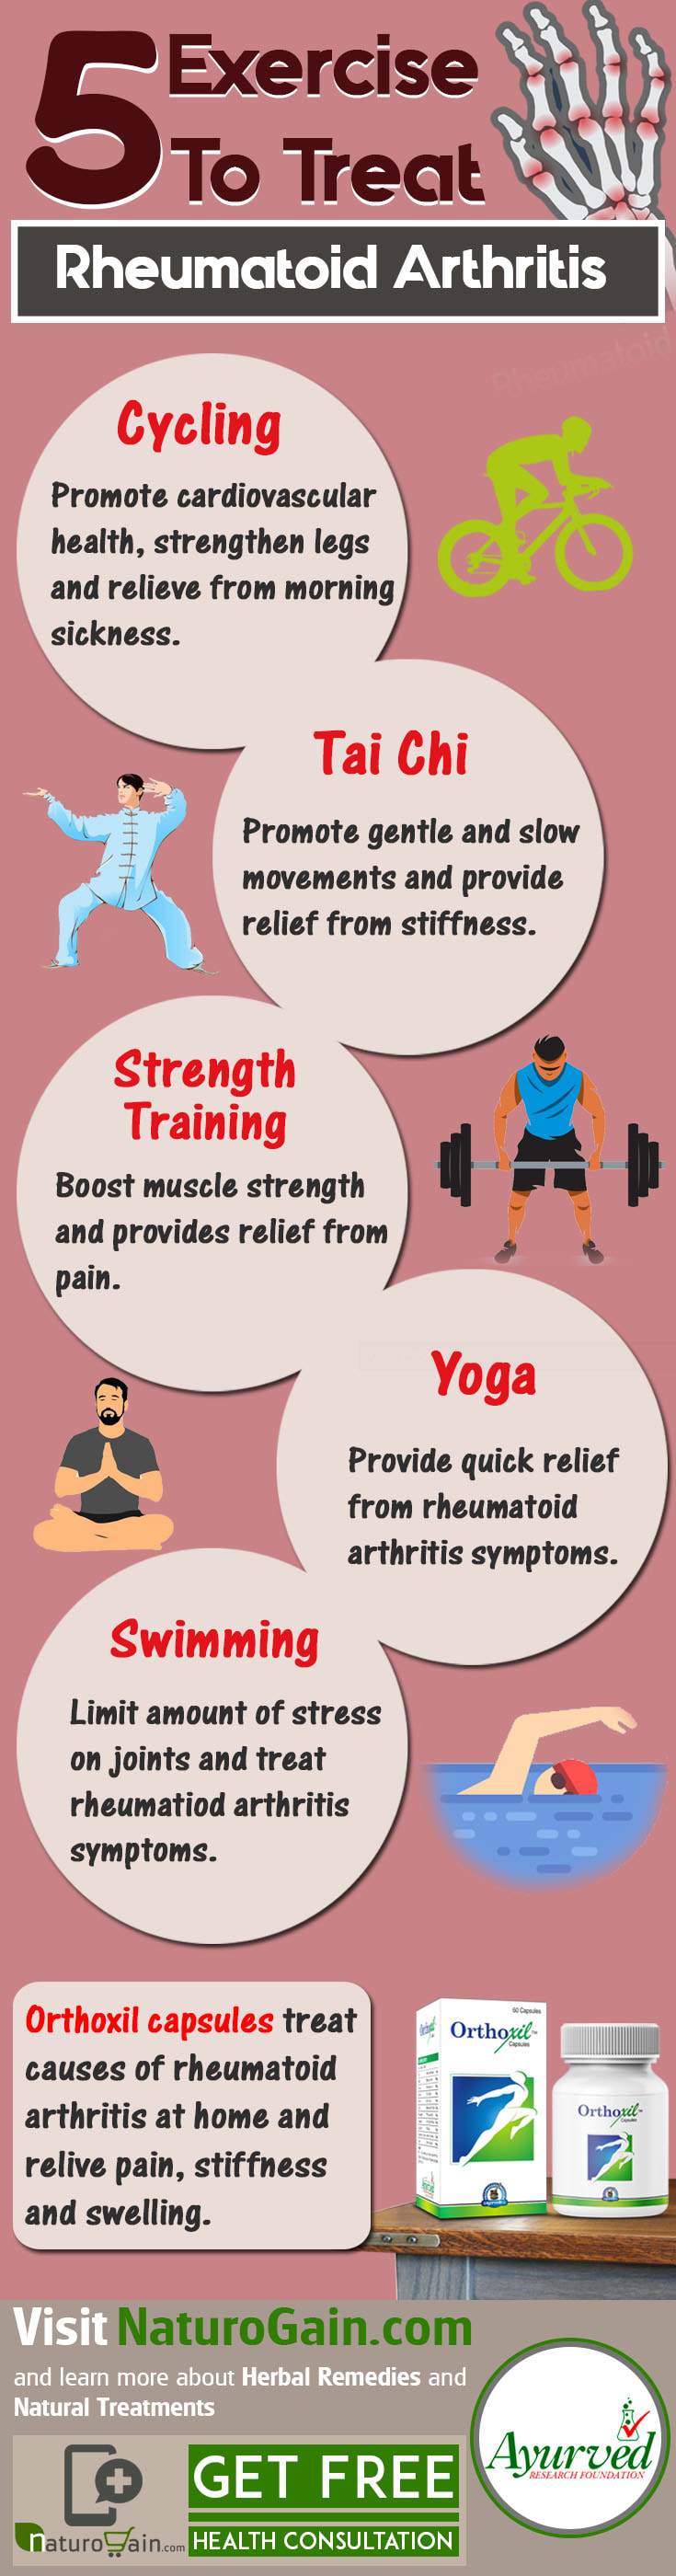 exercise-for-rheumatoid-arthritis-infographic